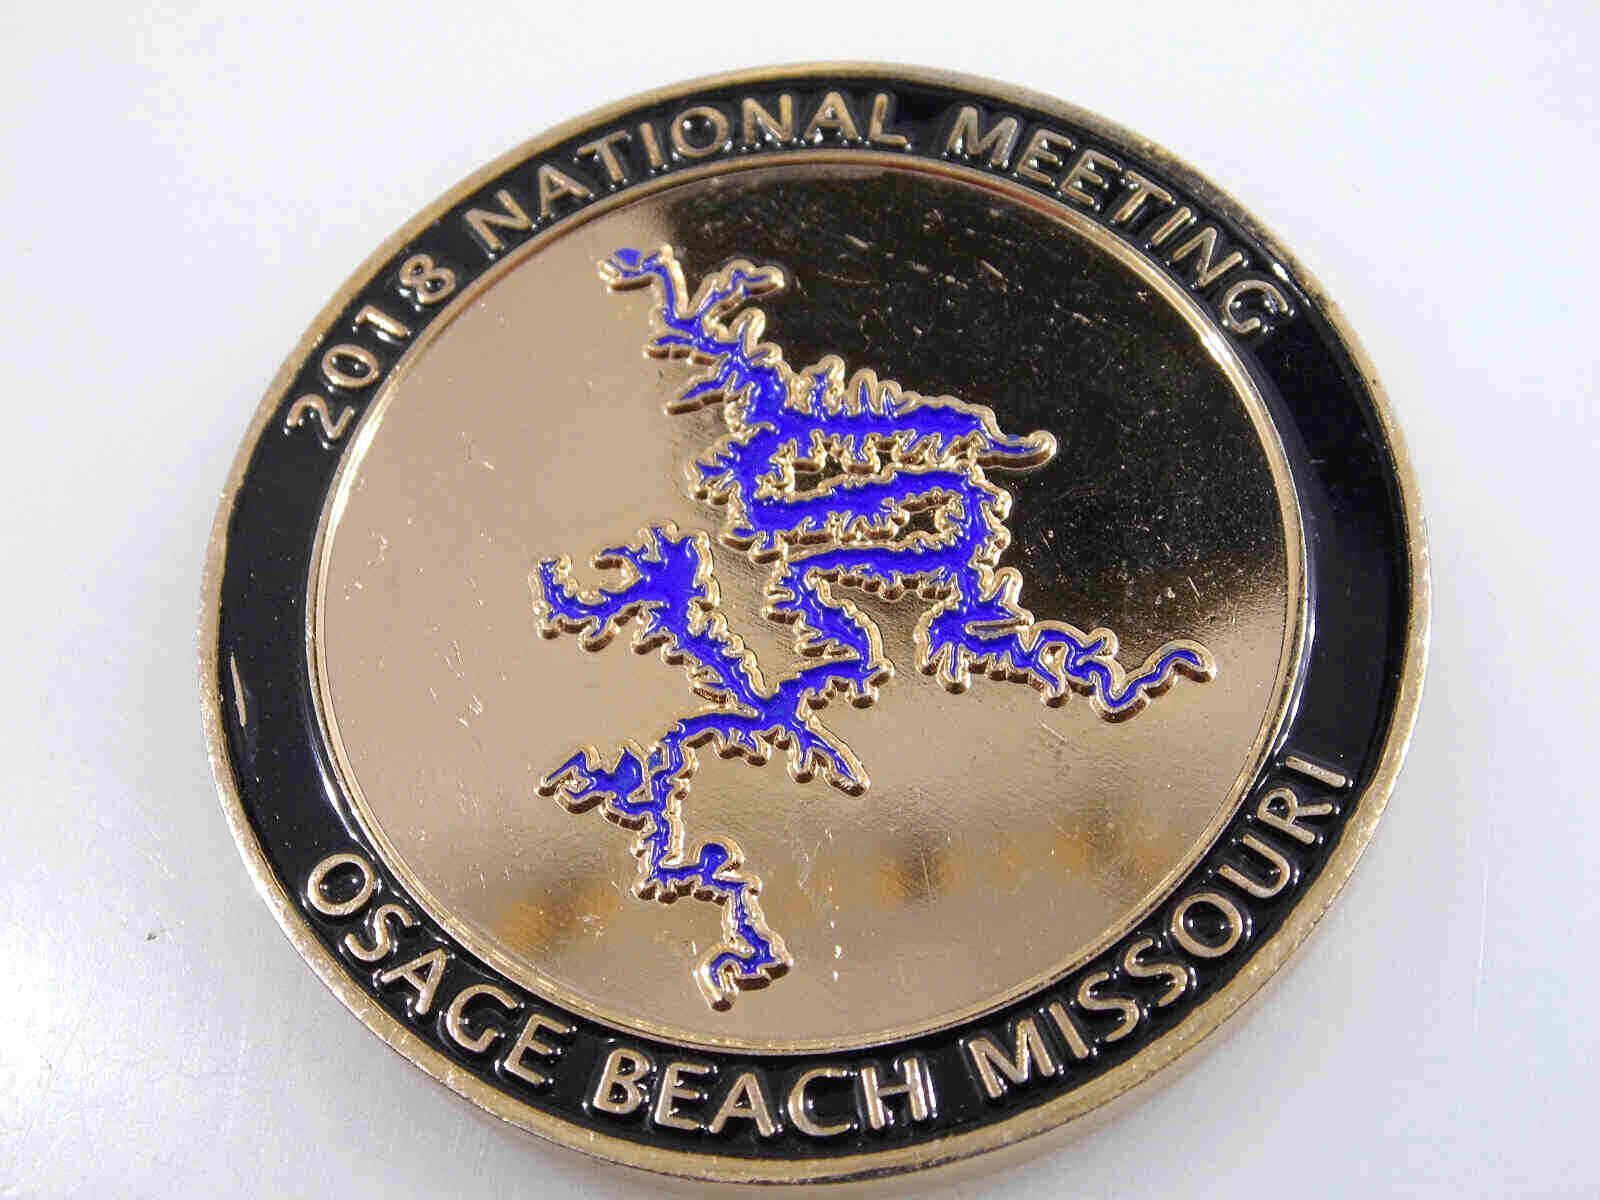 2018 NATIONAL MEETING OSAGE BEACH MISSOURI MARINES CHALLENGE COIN